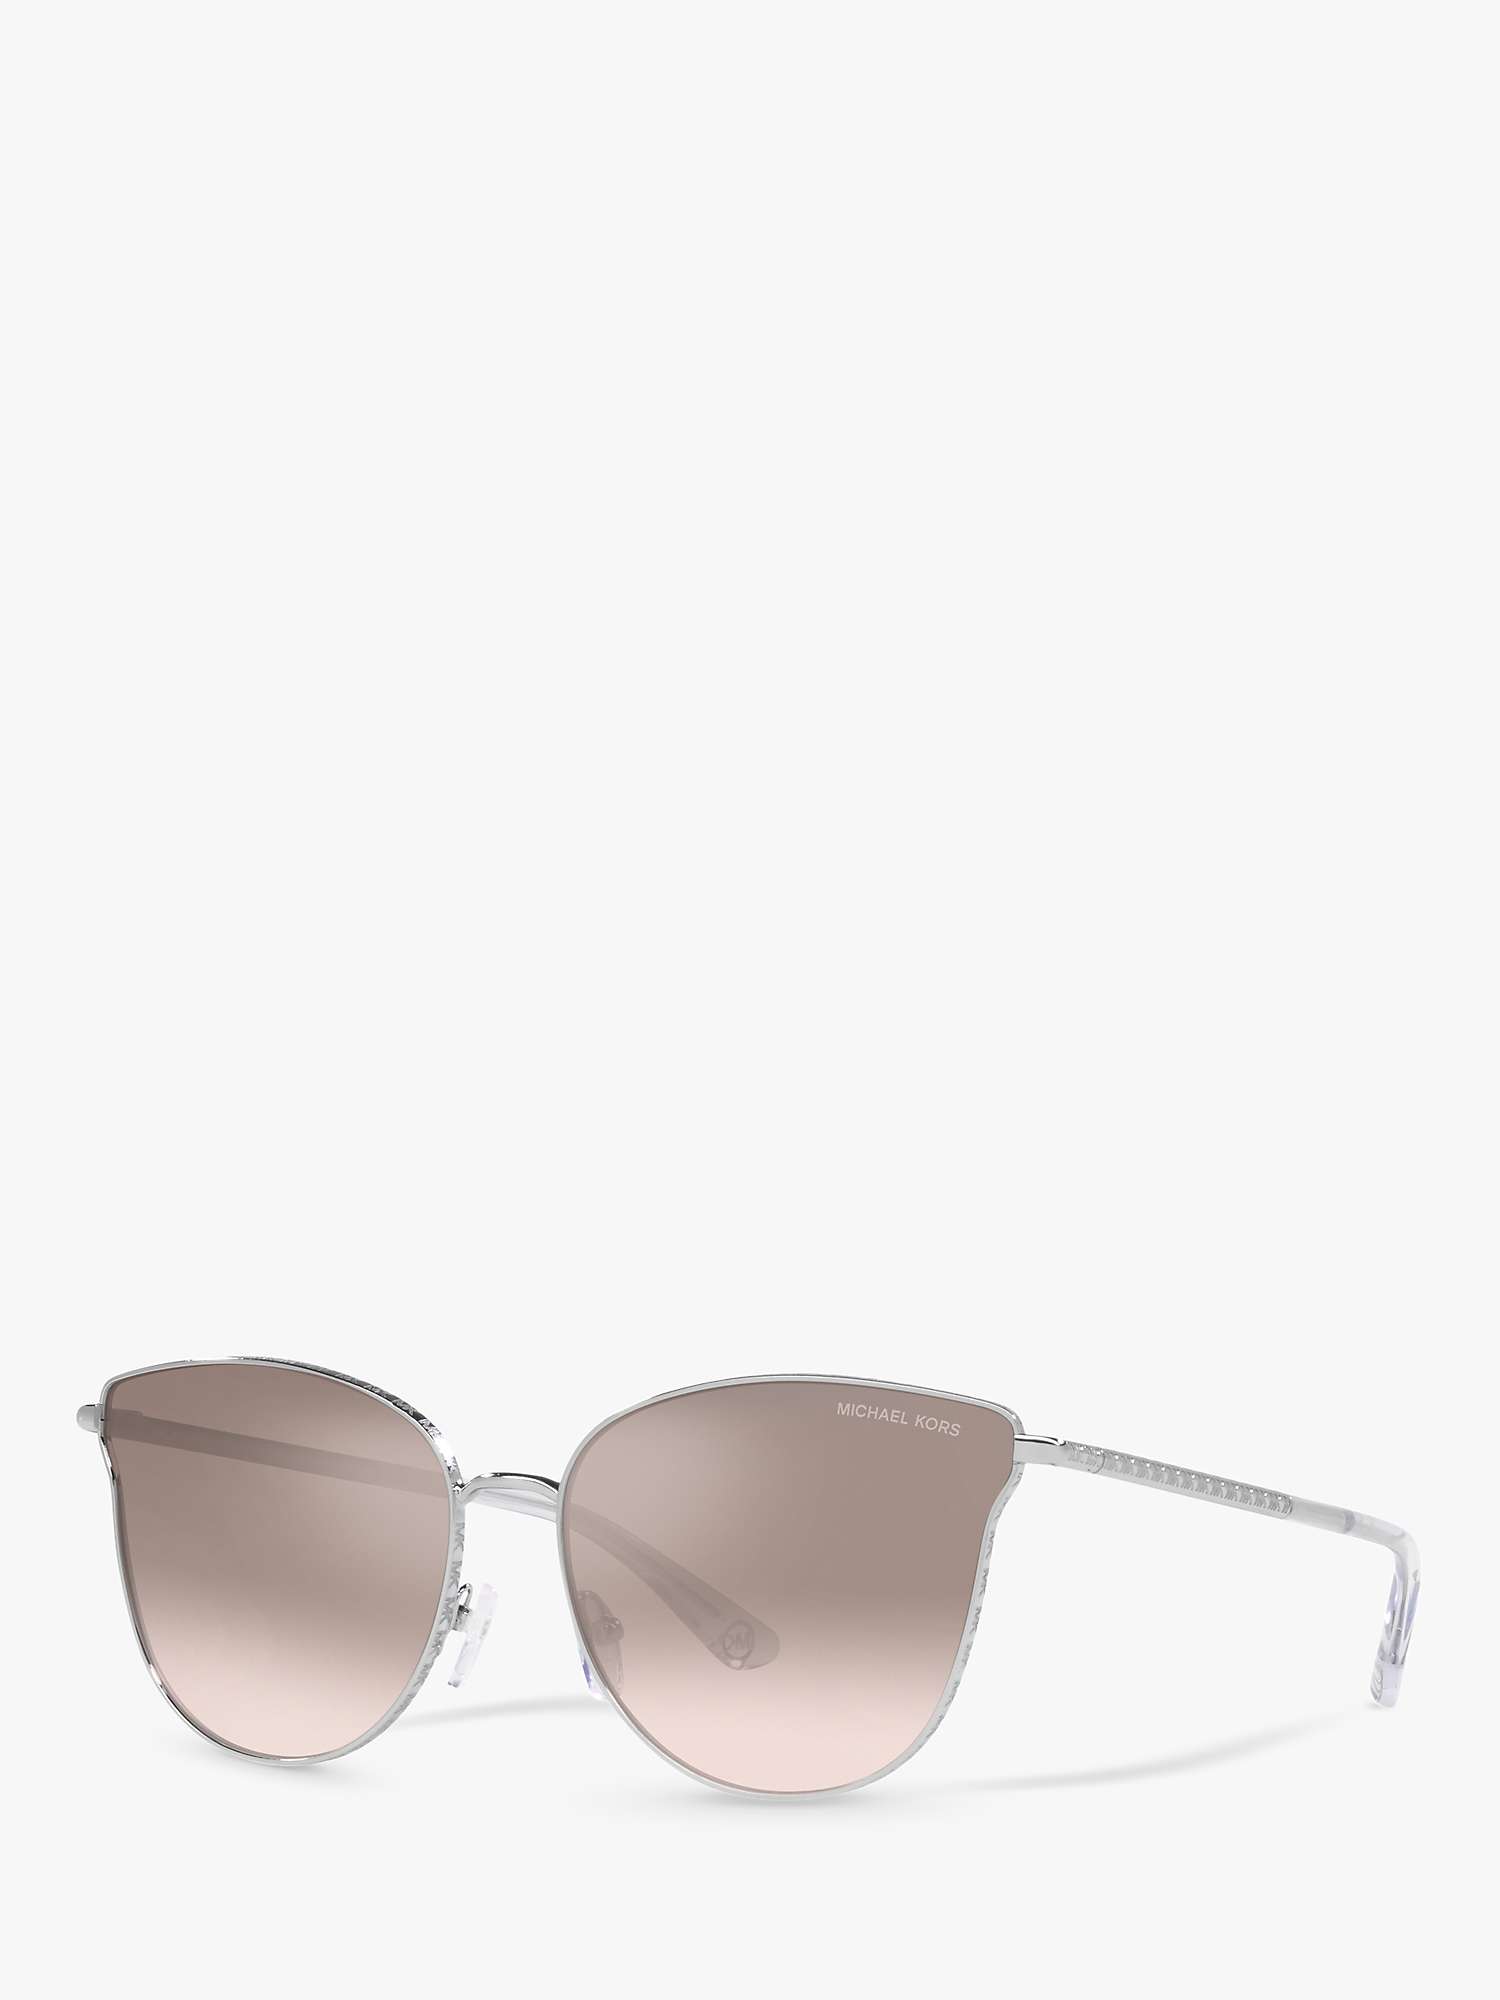 Buy Michael Kors MK1120 Women's Salt Lake City Round Sunglasses, Silver/Beige Gradient Online at johnlewis.com